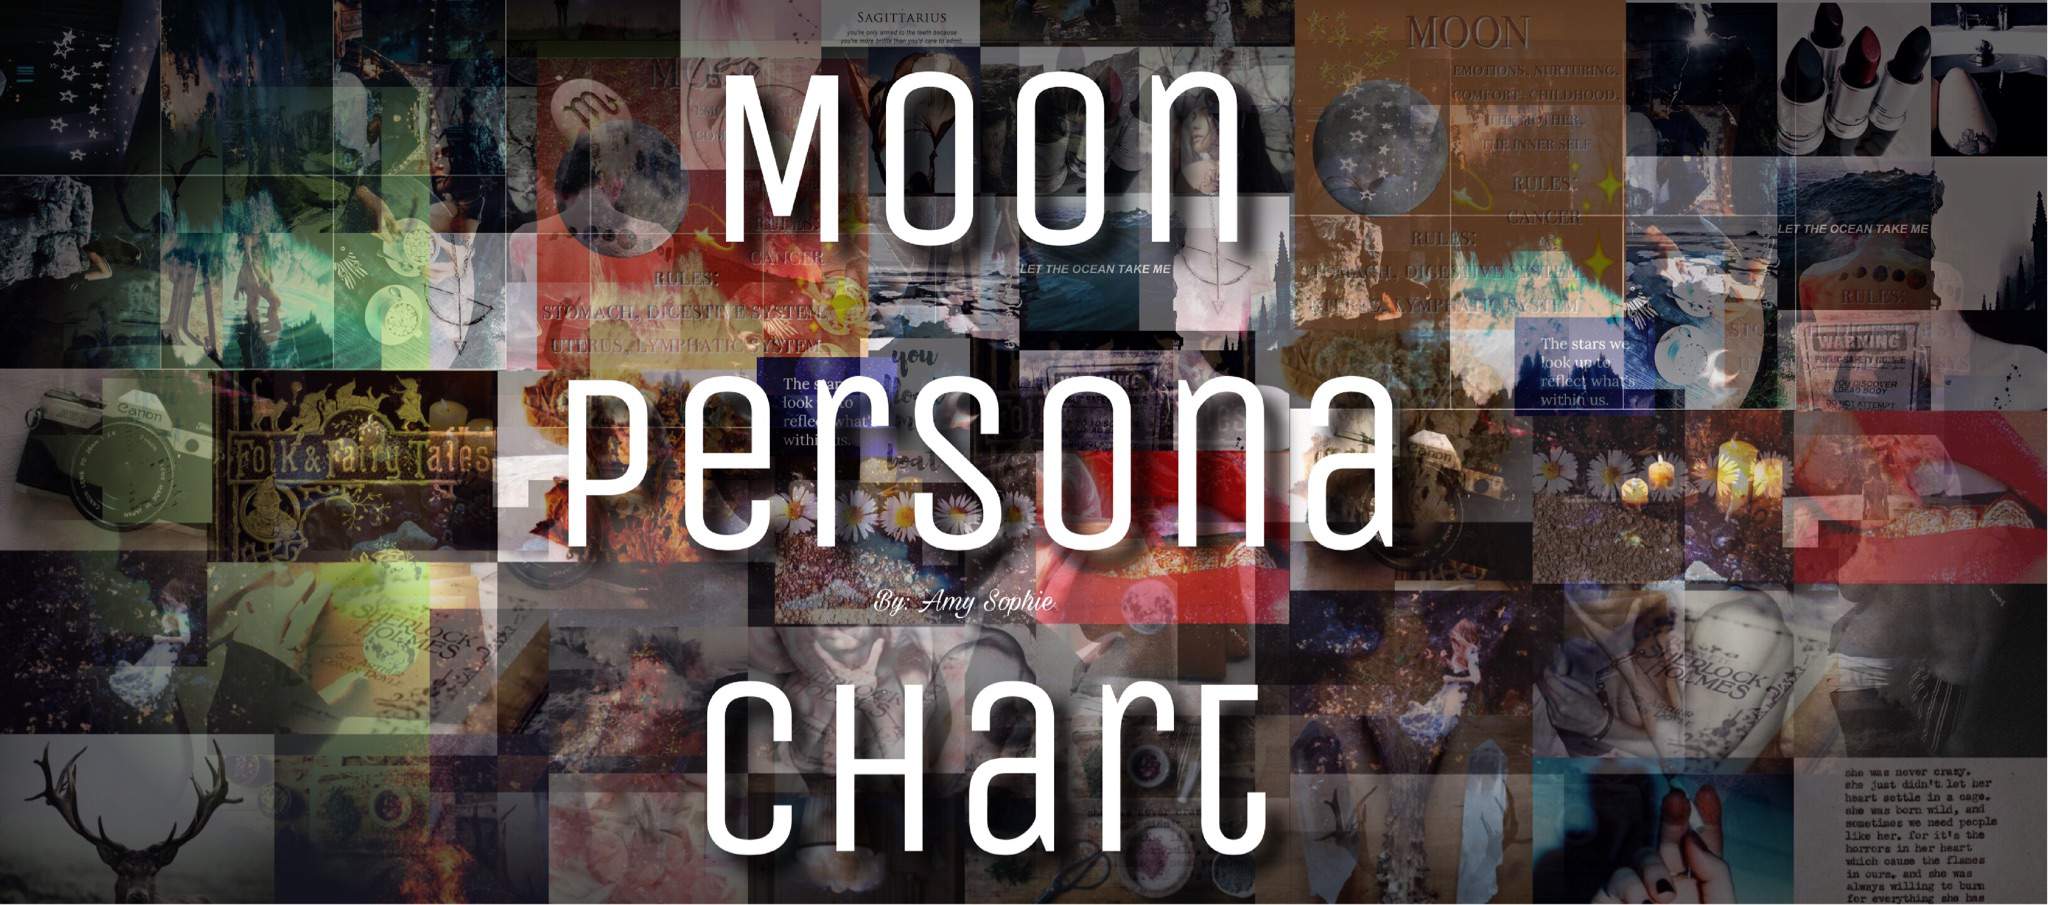 Moon Persona Chart